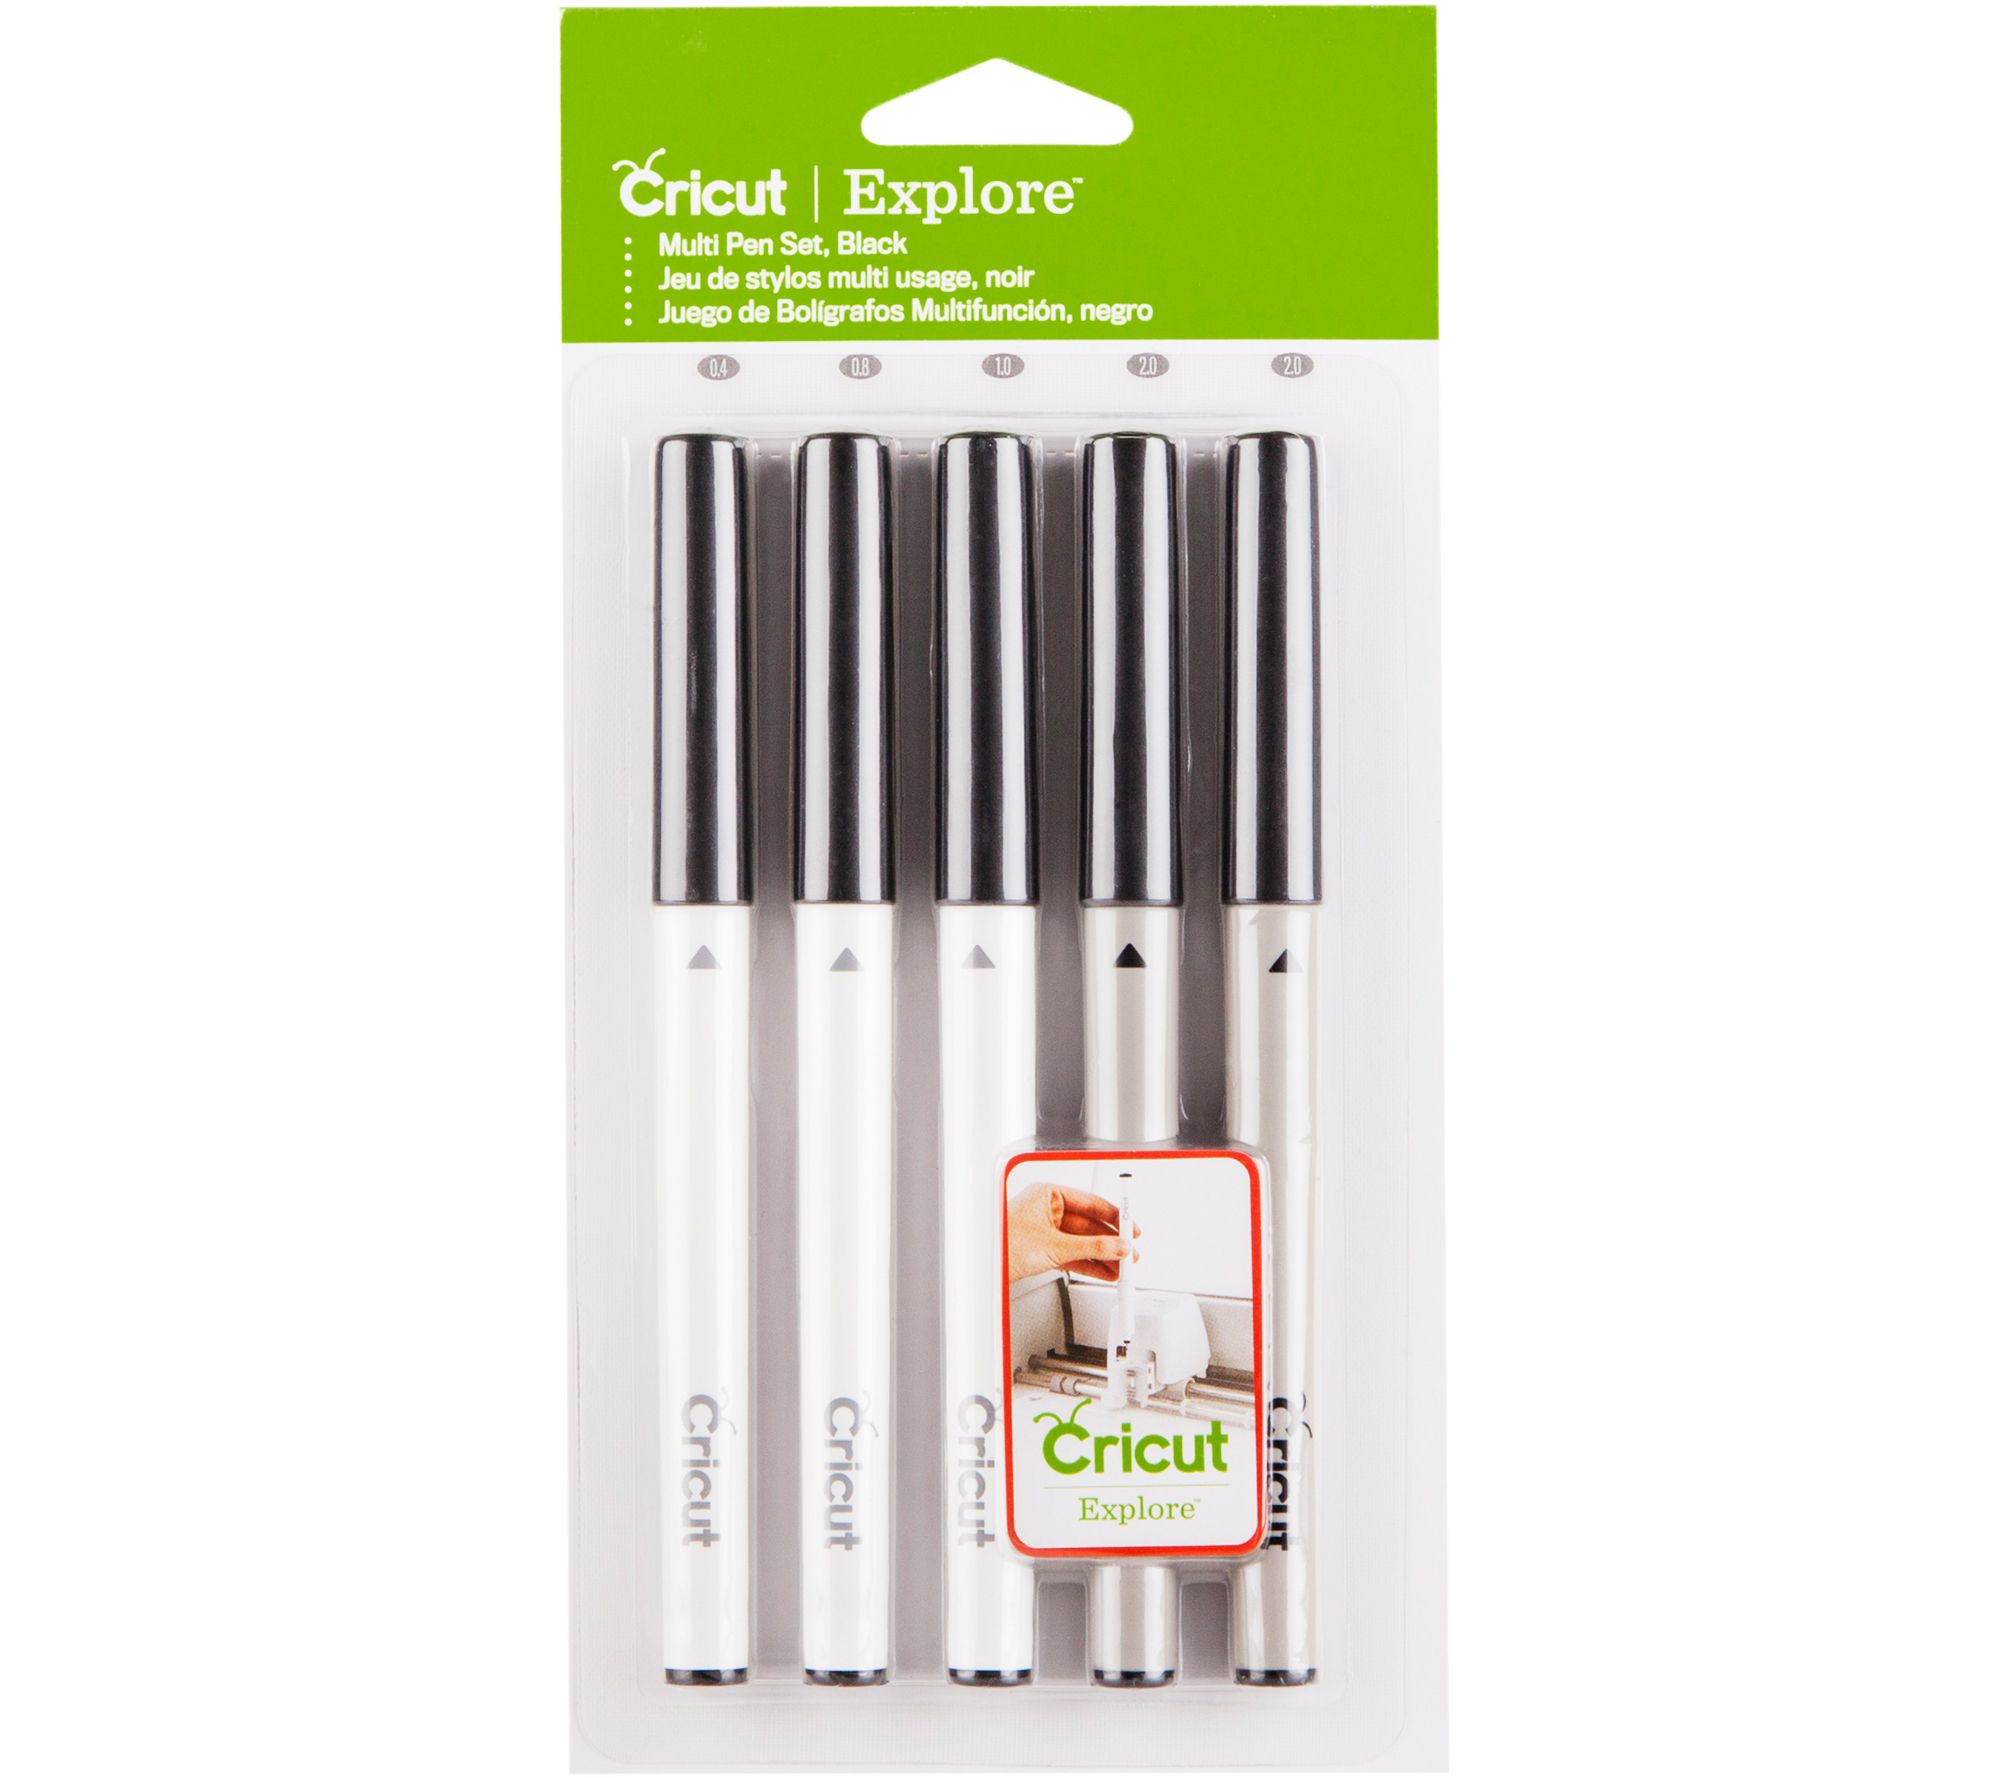 REALIKE Metallic Pens for Cricut Maker 3/Maker/Explore 3/Air 2/Air,  Multicolor Marker Pens Set of 12 Pack Drawing Coloring Pens Compatible with  Cricut